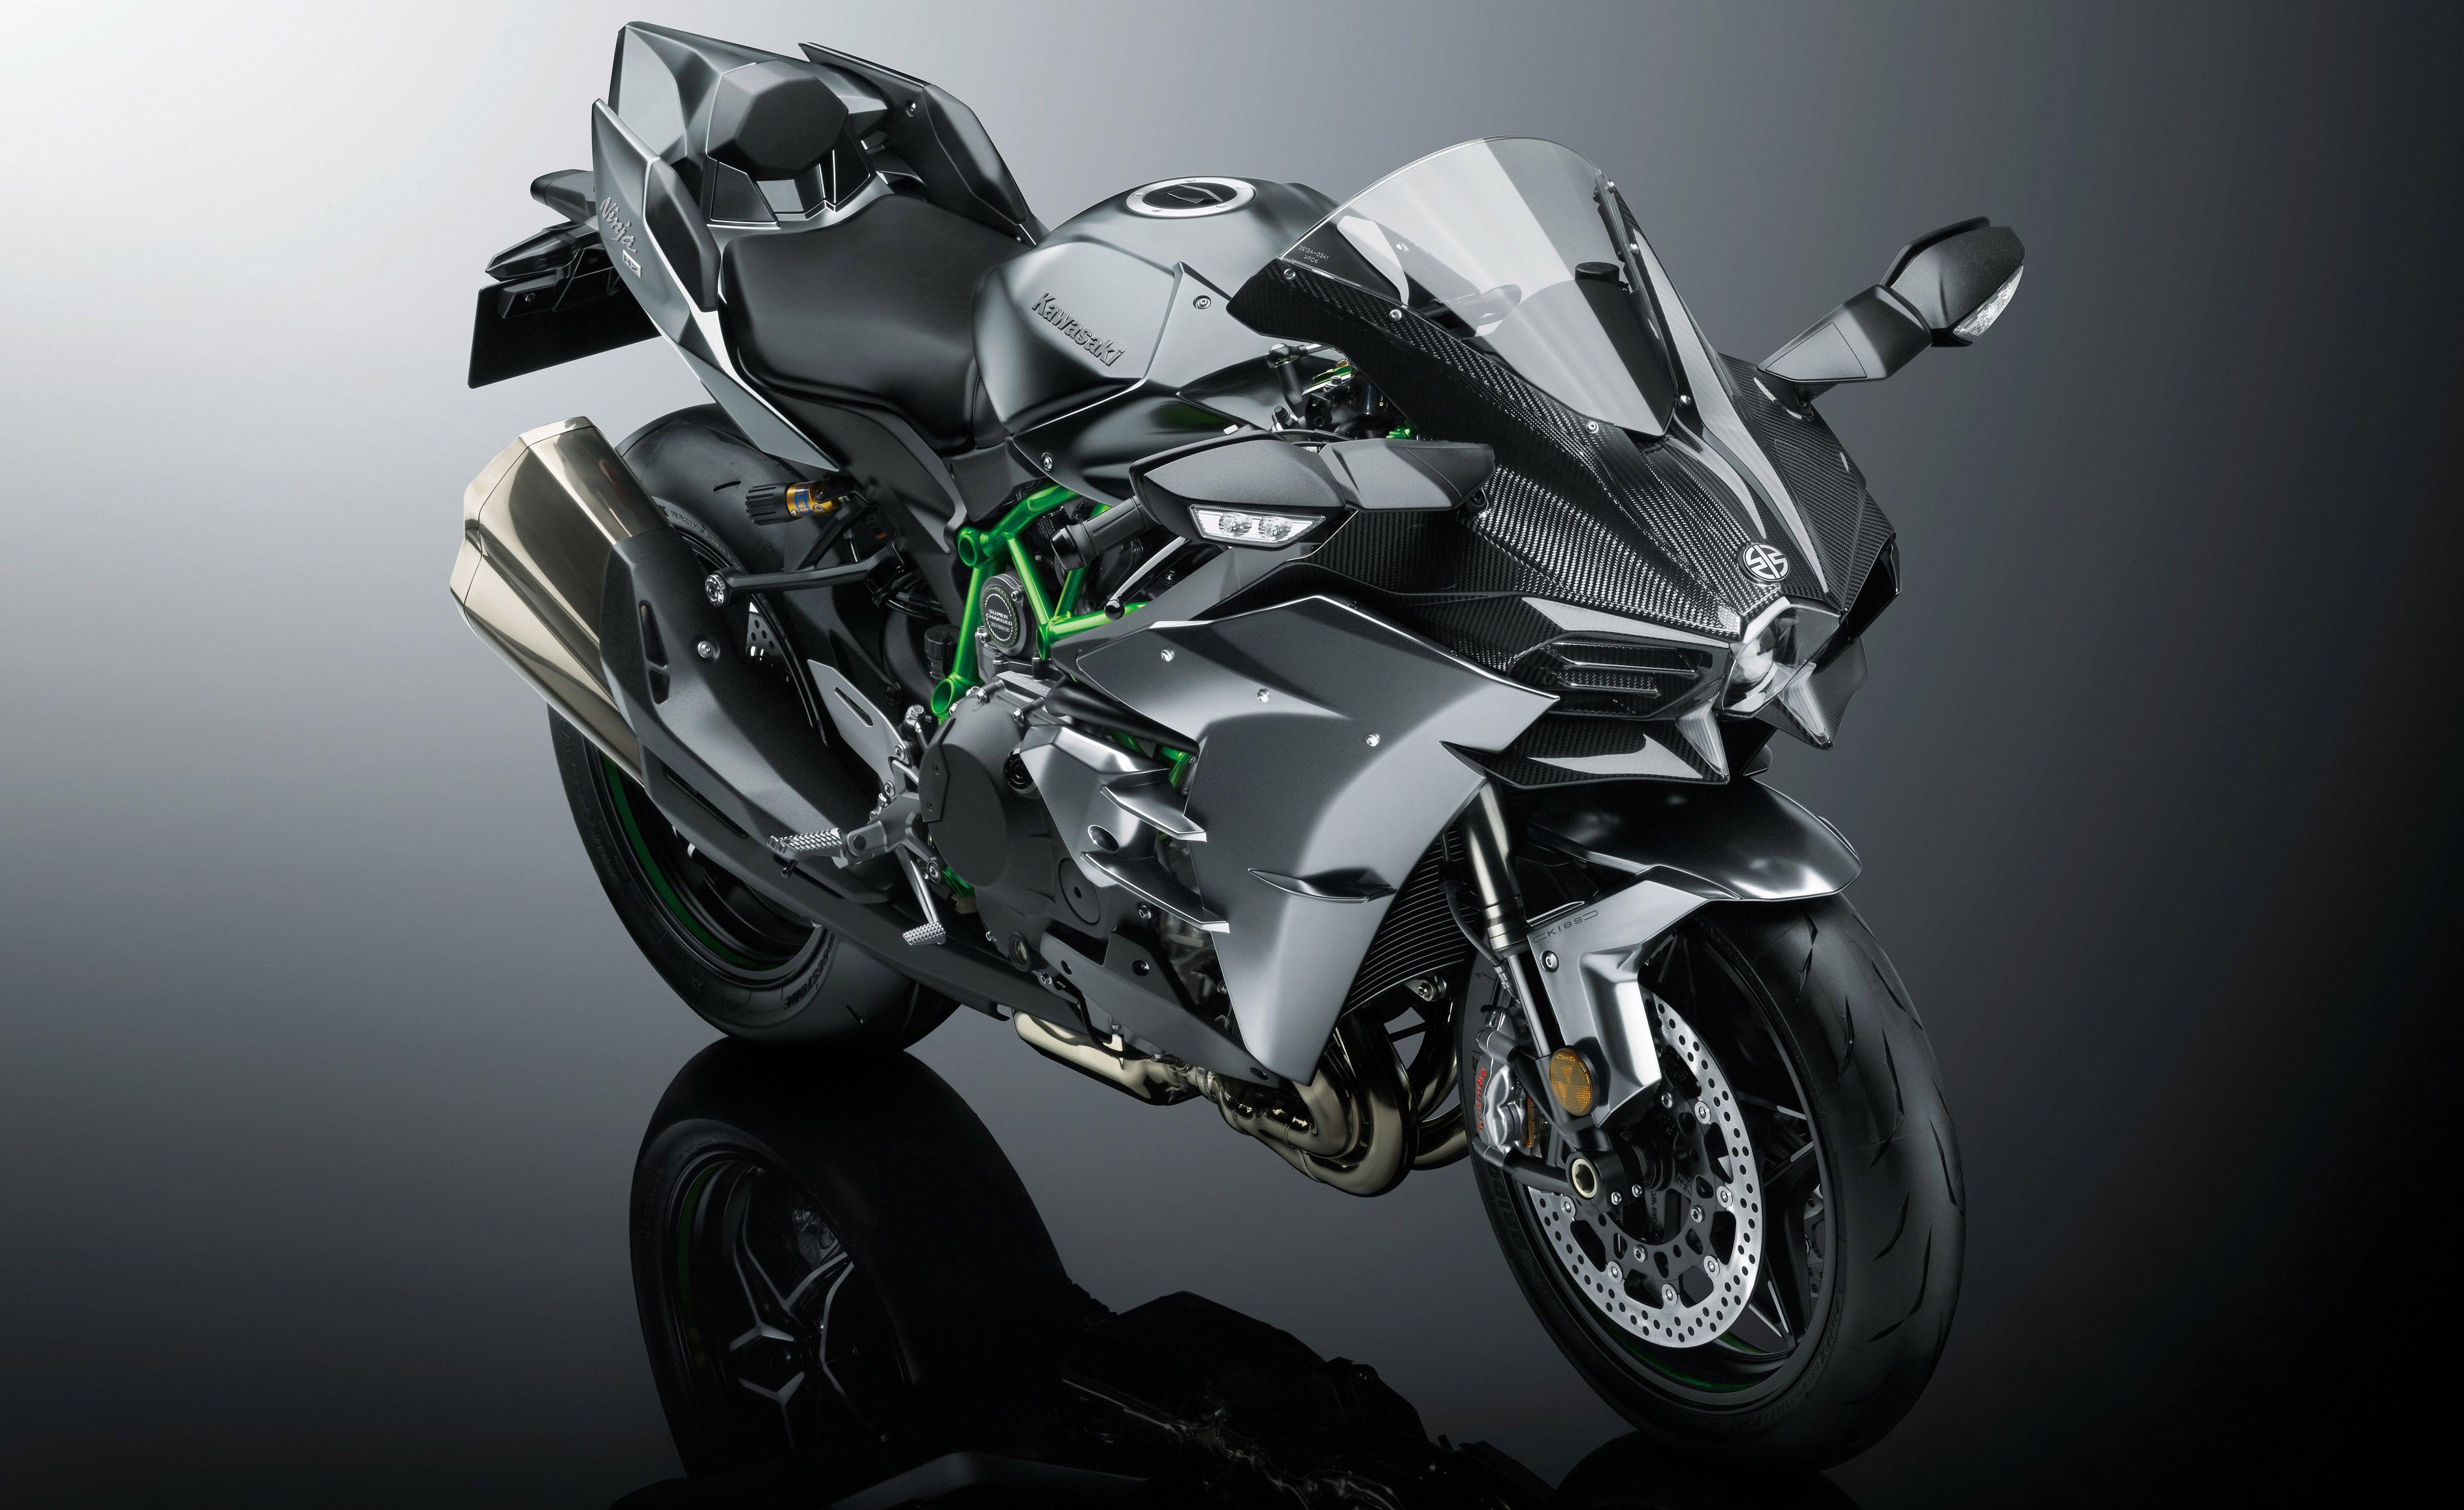 Kawasaki Ninja H2, HD Bikes, 4k Wallpapers, Image, Backgrounds